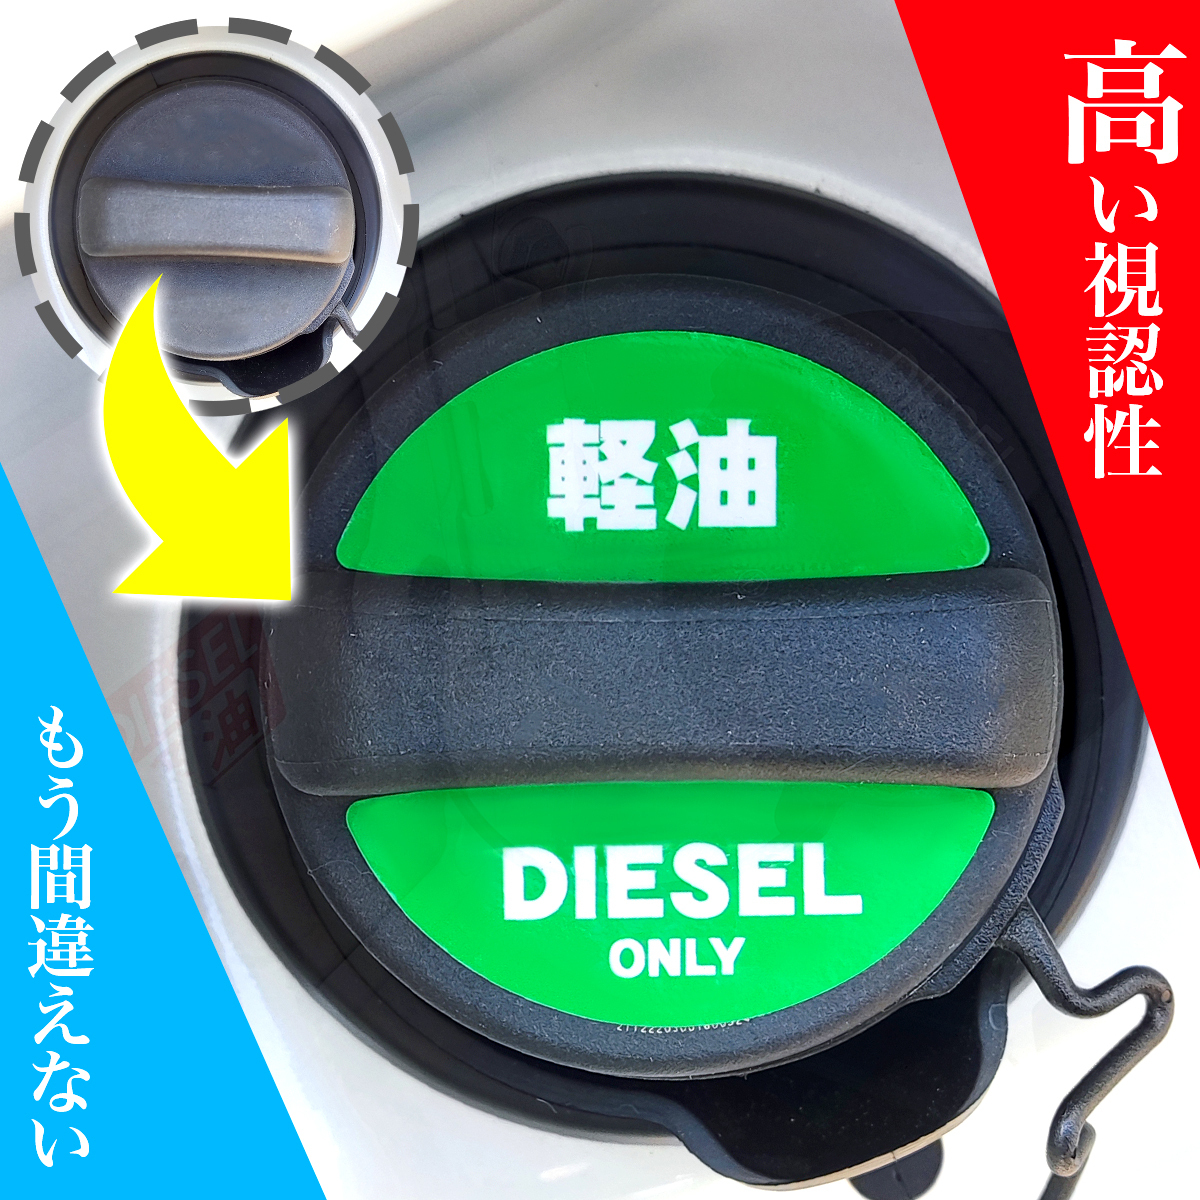 EXPROUD 給油口キャップ用燃料表示ステッカー&長方形ステッカーセット ディーゼル 軽油 油種間違い防止 グリーン FCS-B 日本製-B09WDHXSMC_画像2